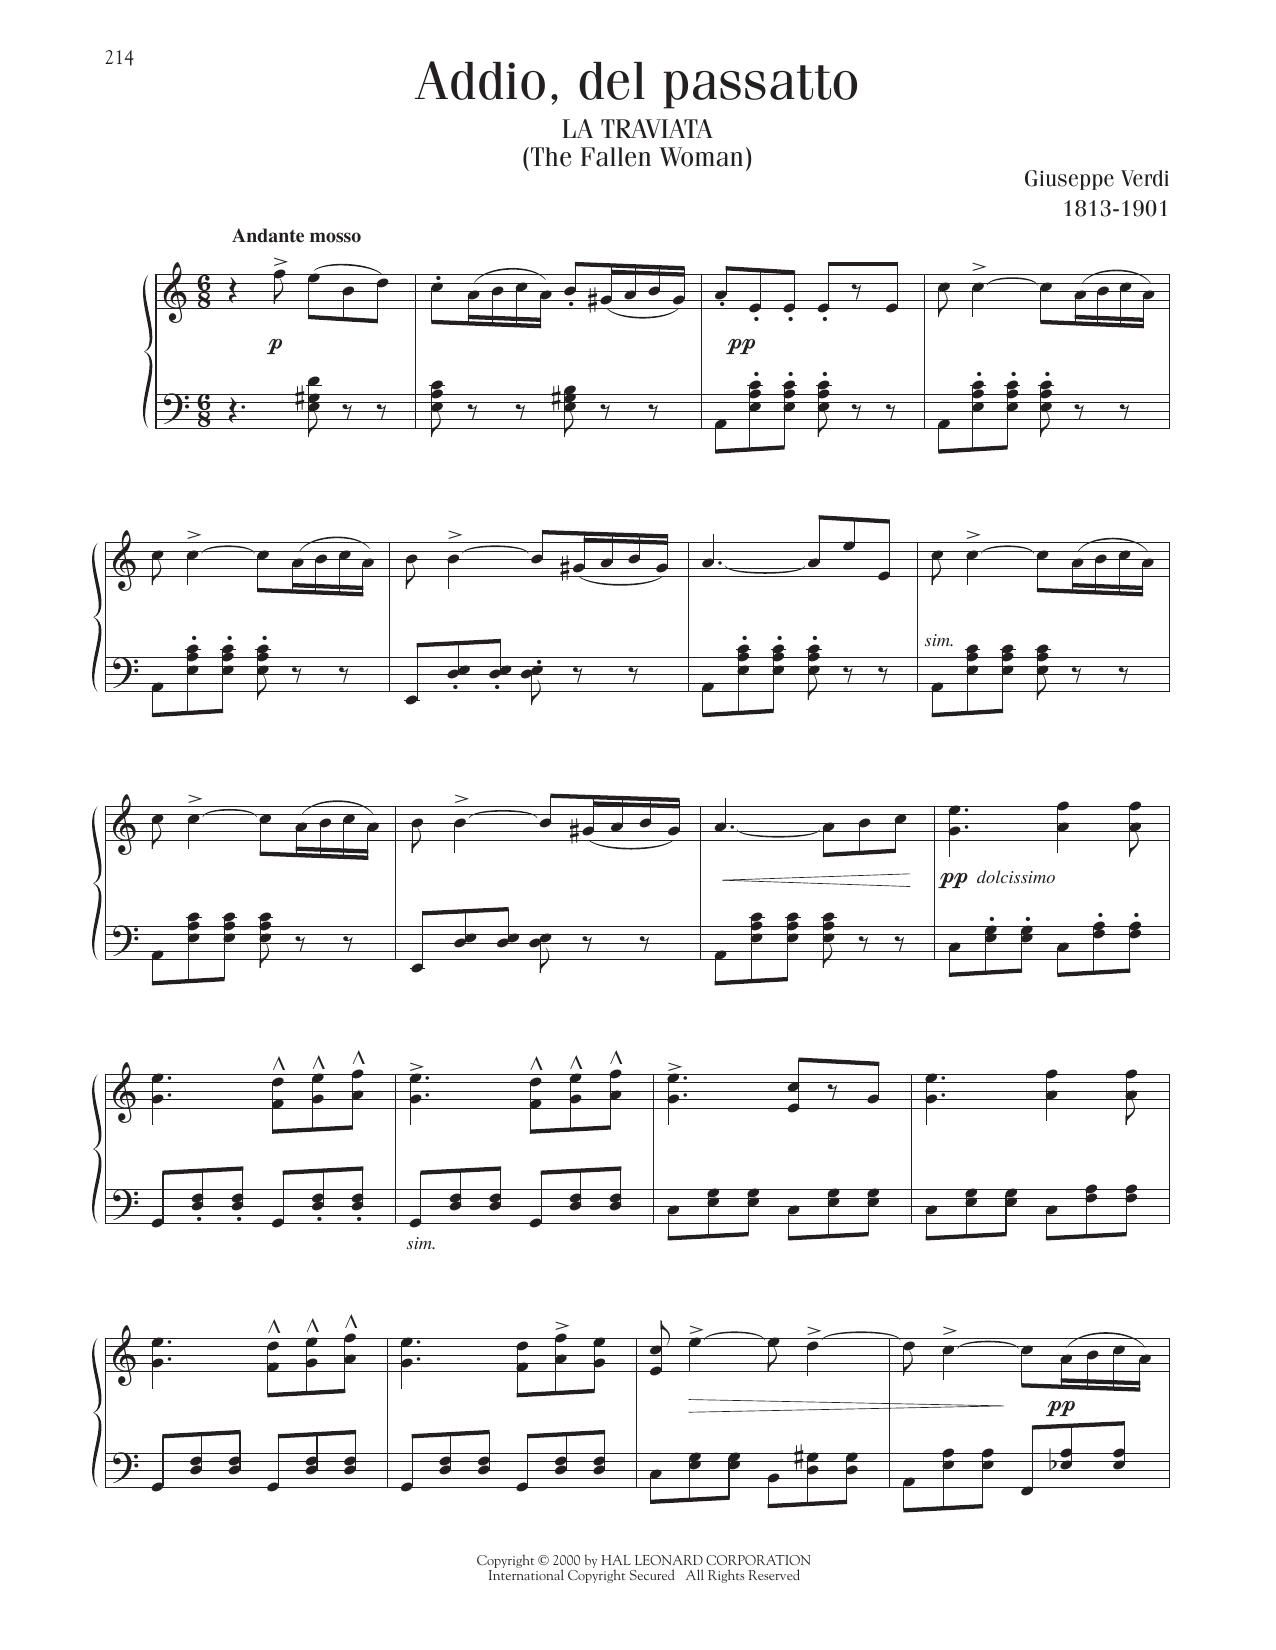 Giuseppe Verdi Addio, Del Passatto sheet music notes printable PDF score